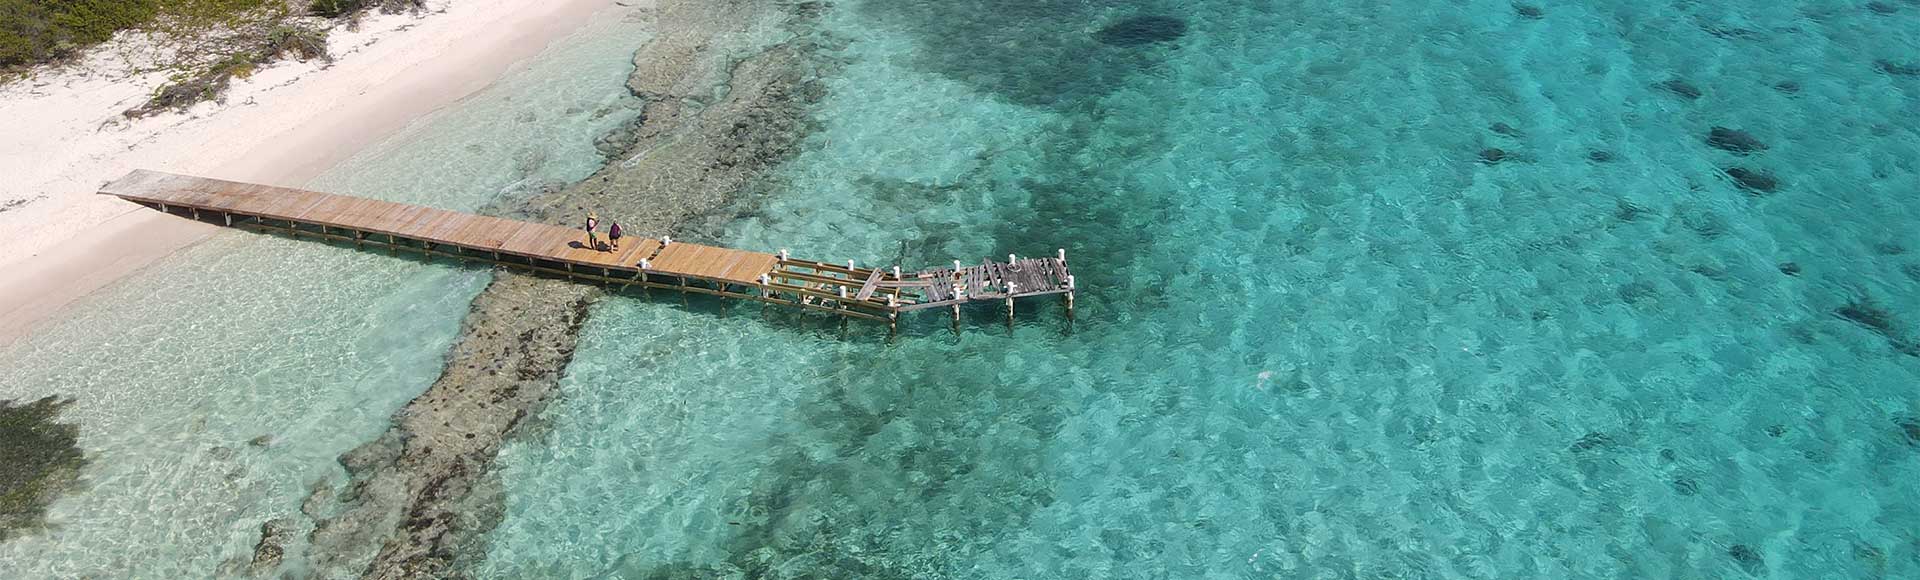 Cayman Islands beach with dock